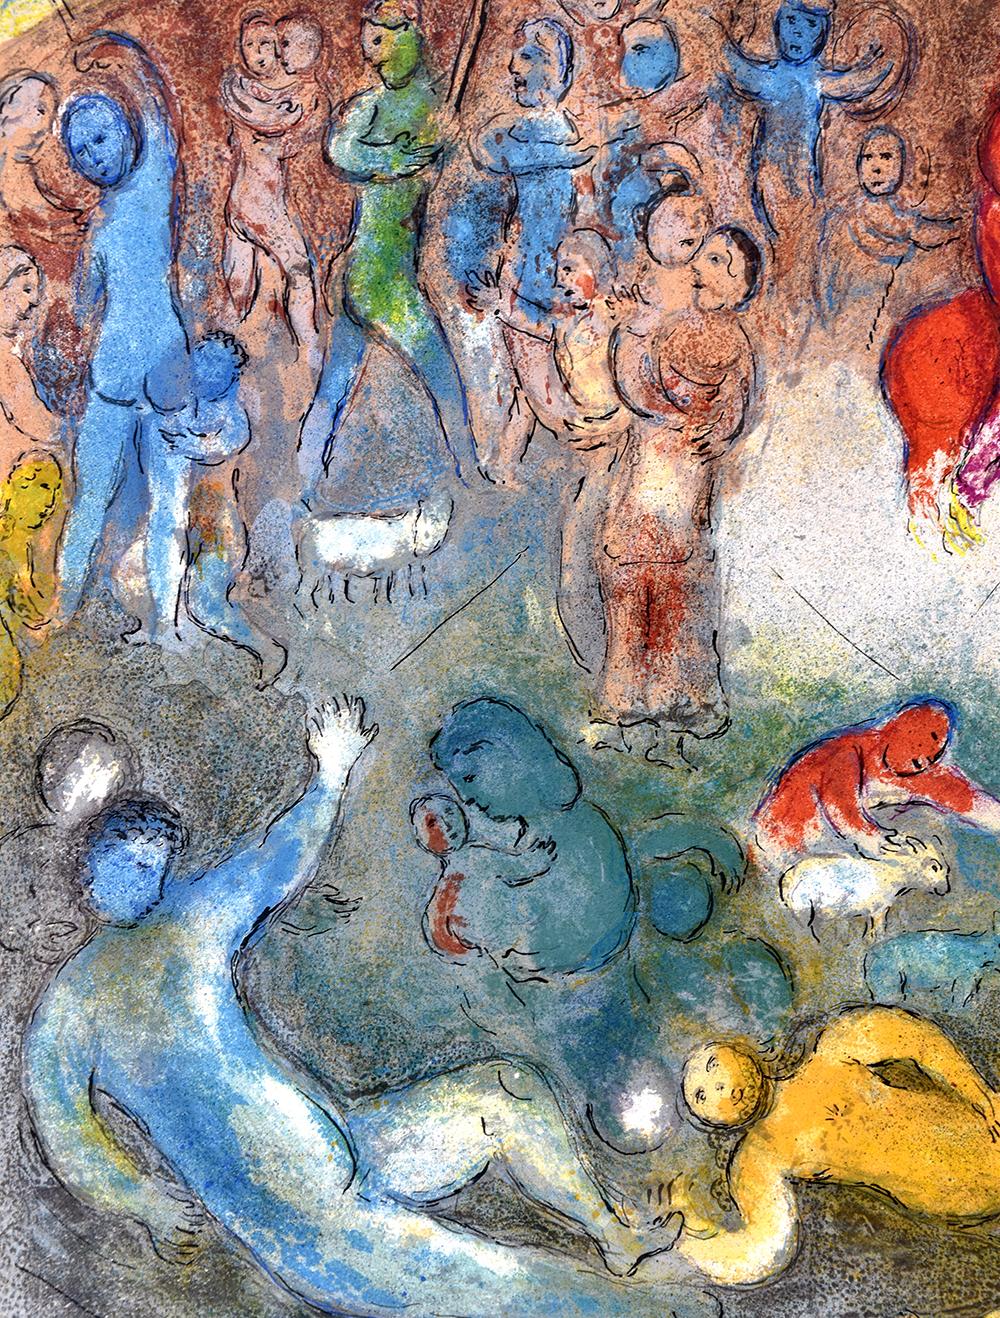 Enlévement de Chloé, from Daphnis and Chloé - Modern Print by Marc Chagall